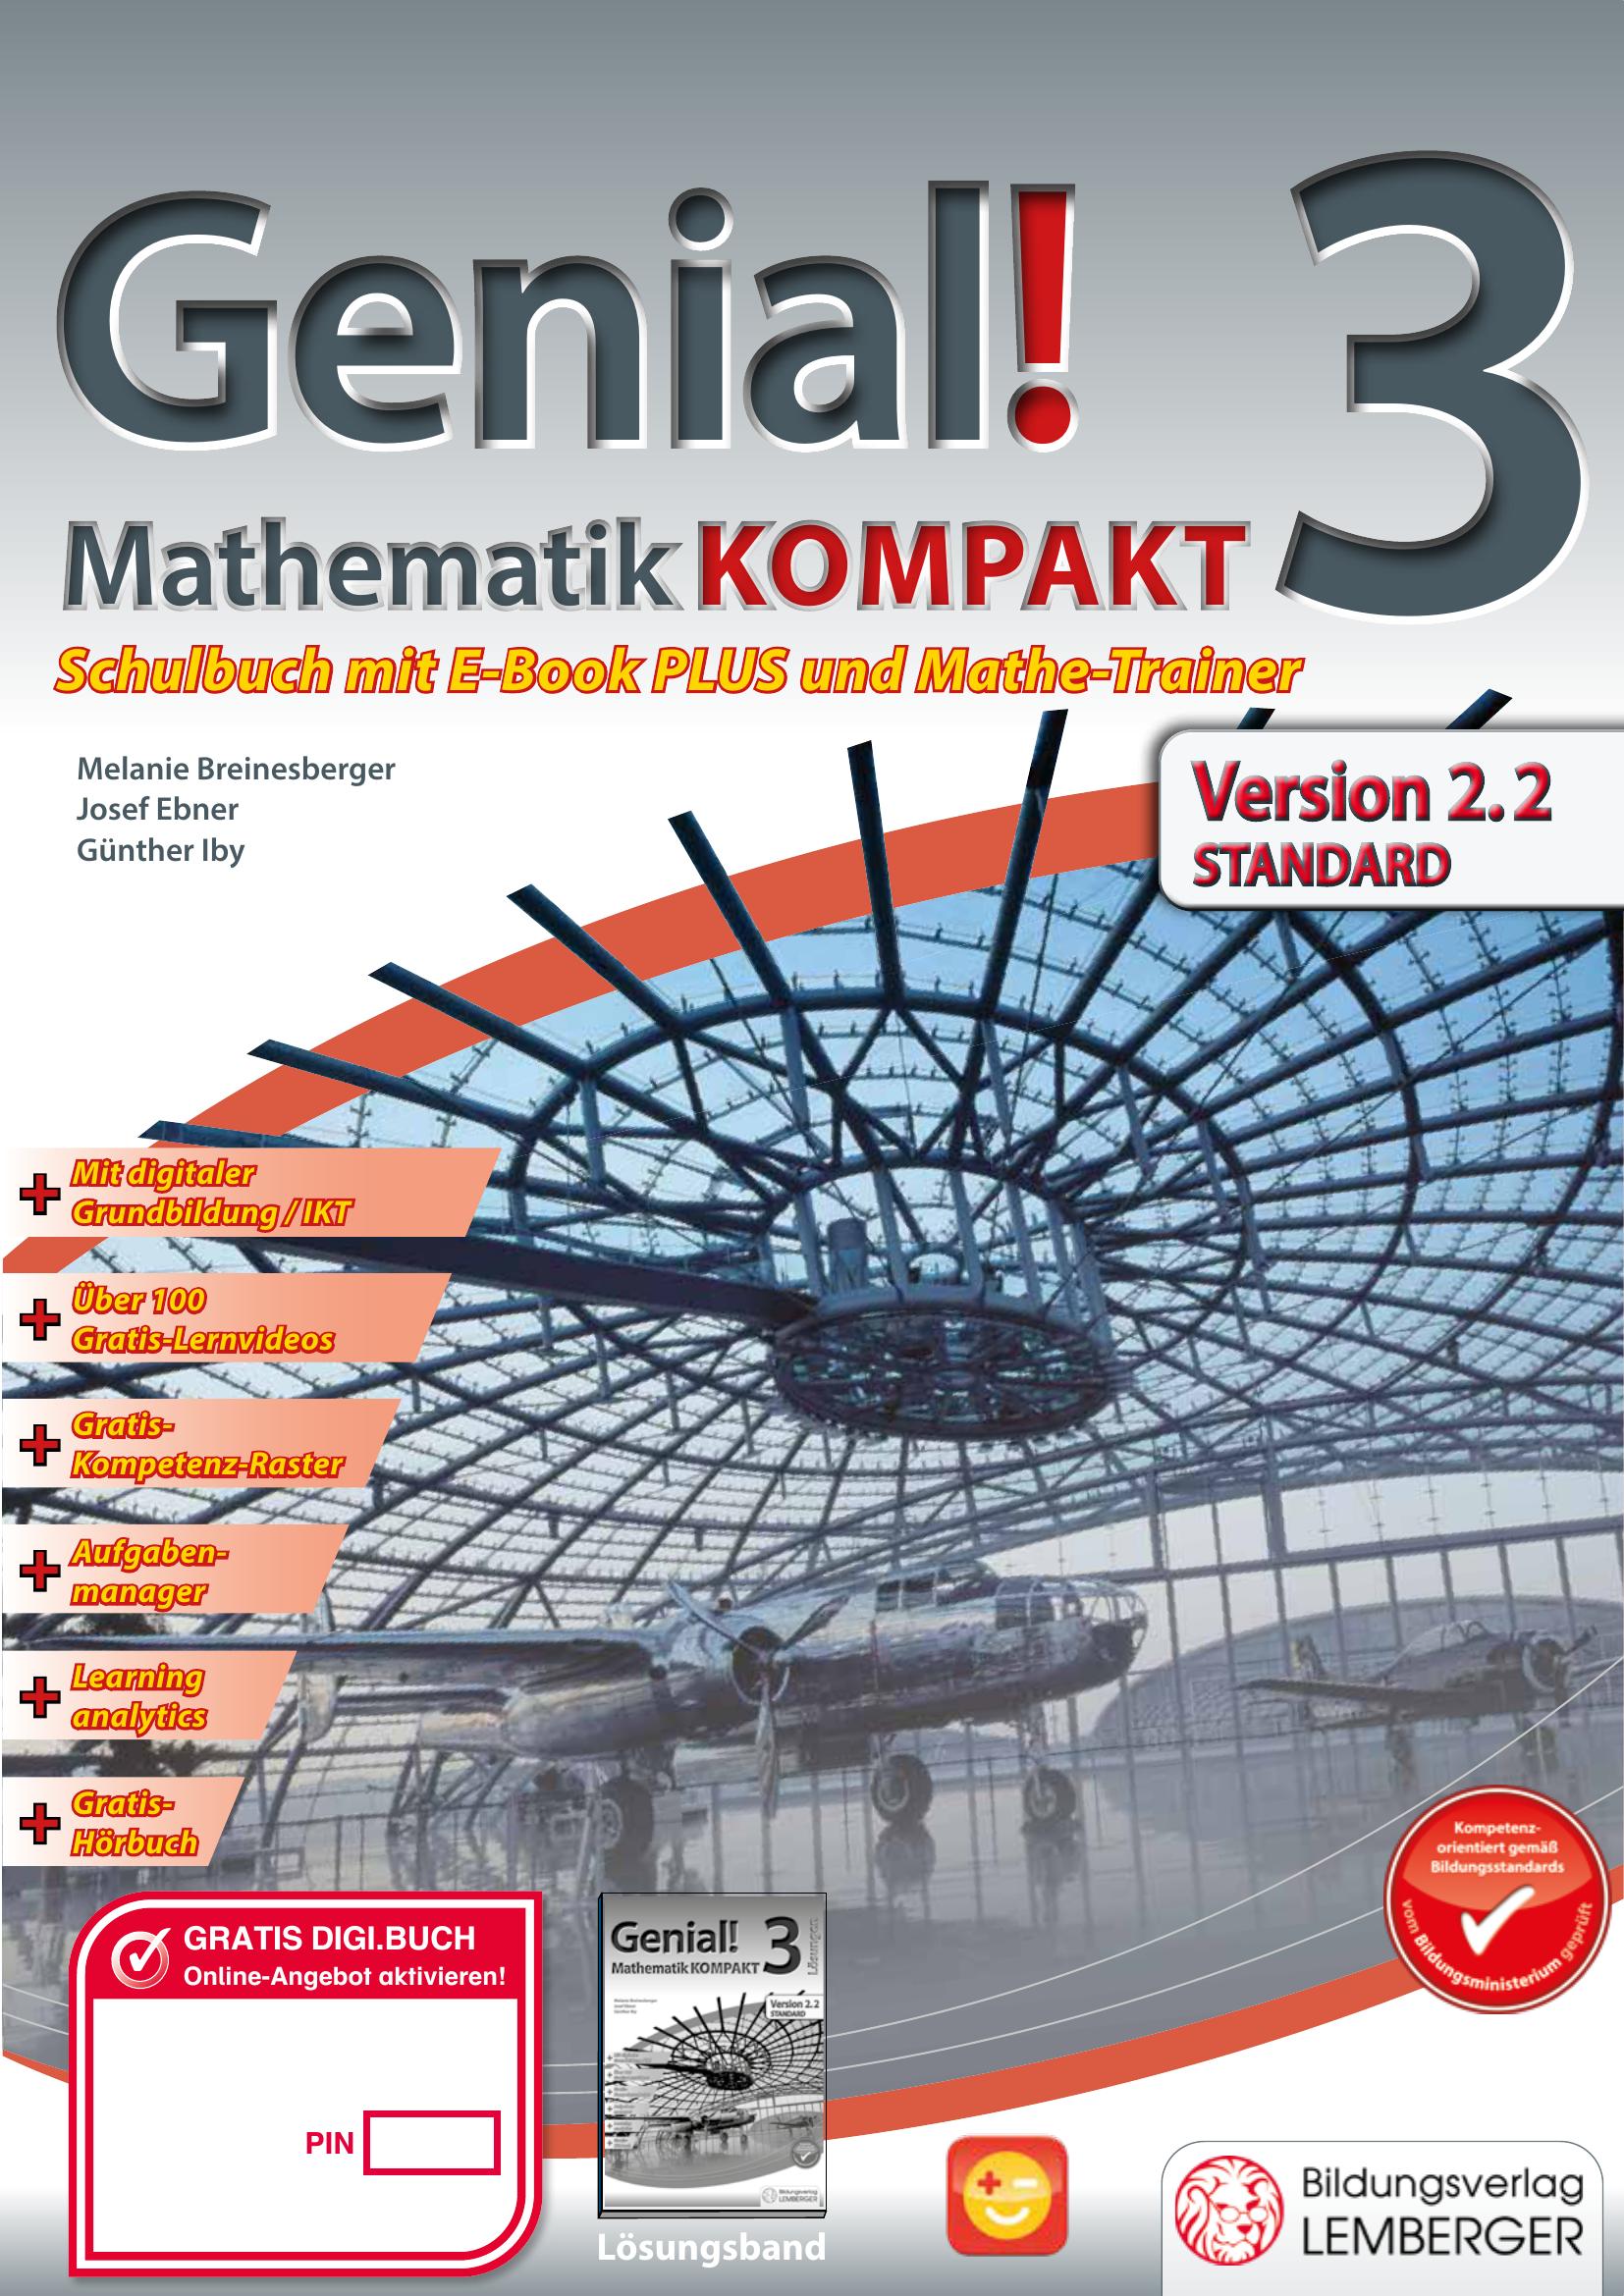 Genial! Mathematik Kompakt 3 IKT v2.2 PLUS-Lizenz mit Genial! Mathe-Trainer